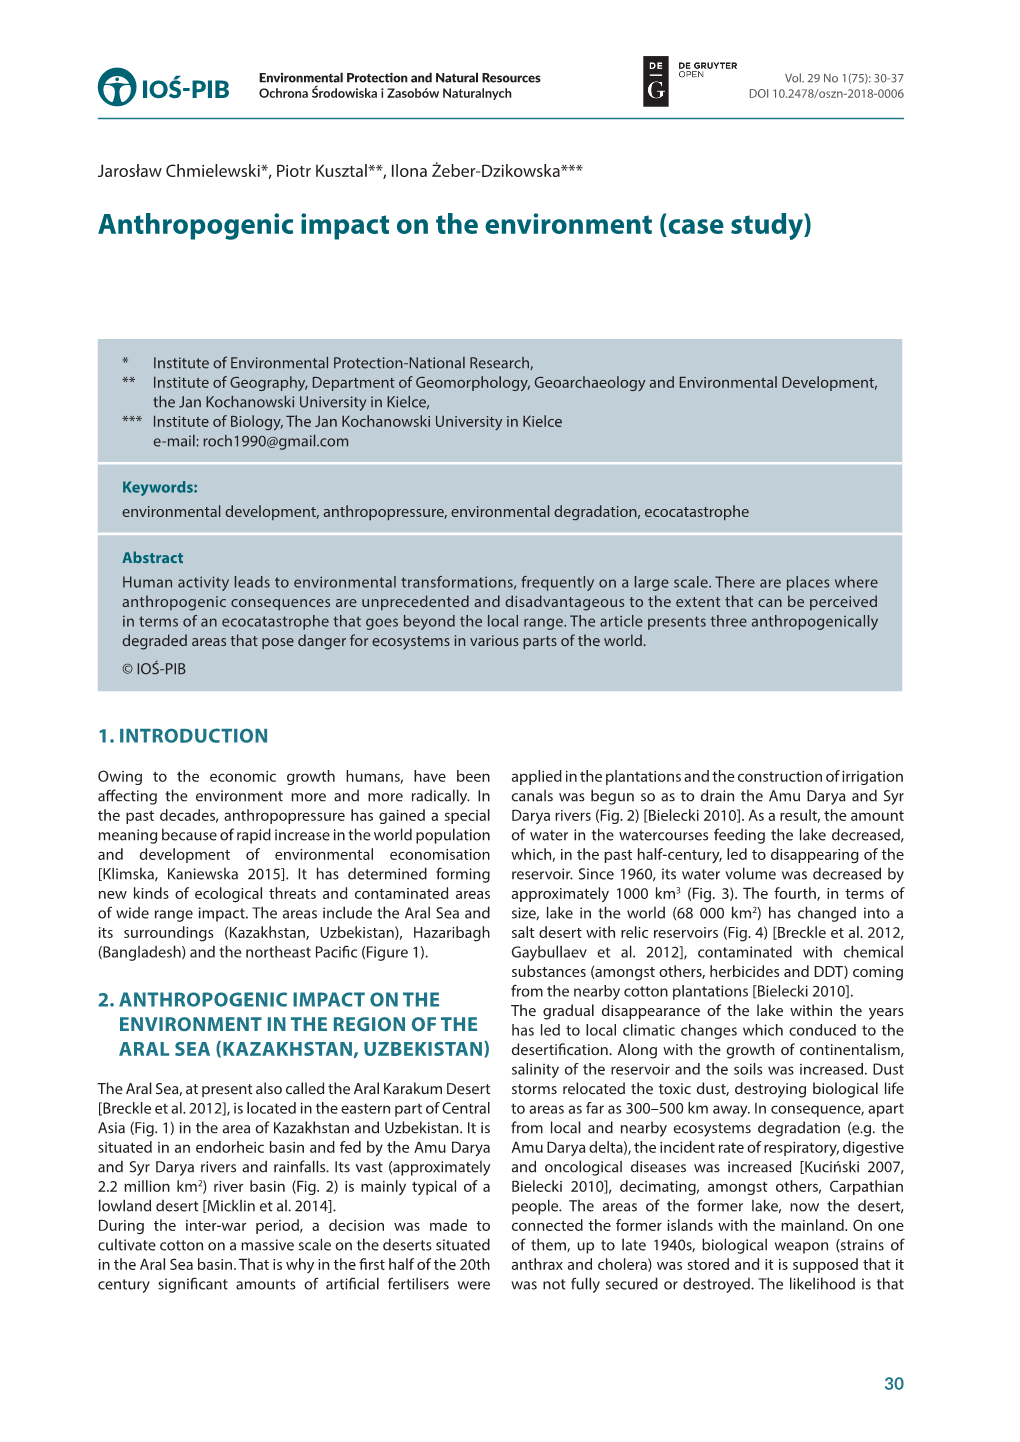 Anthropogenic Impact on the Environment (Case Study)